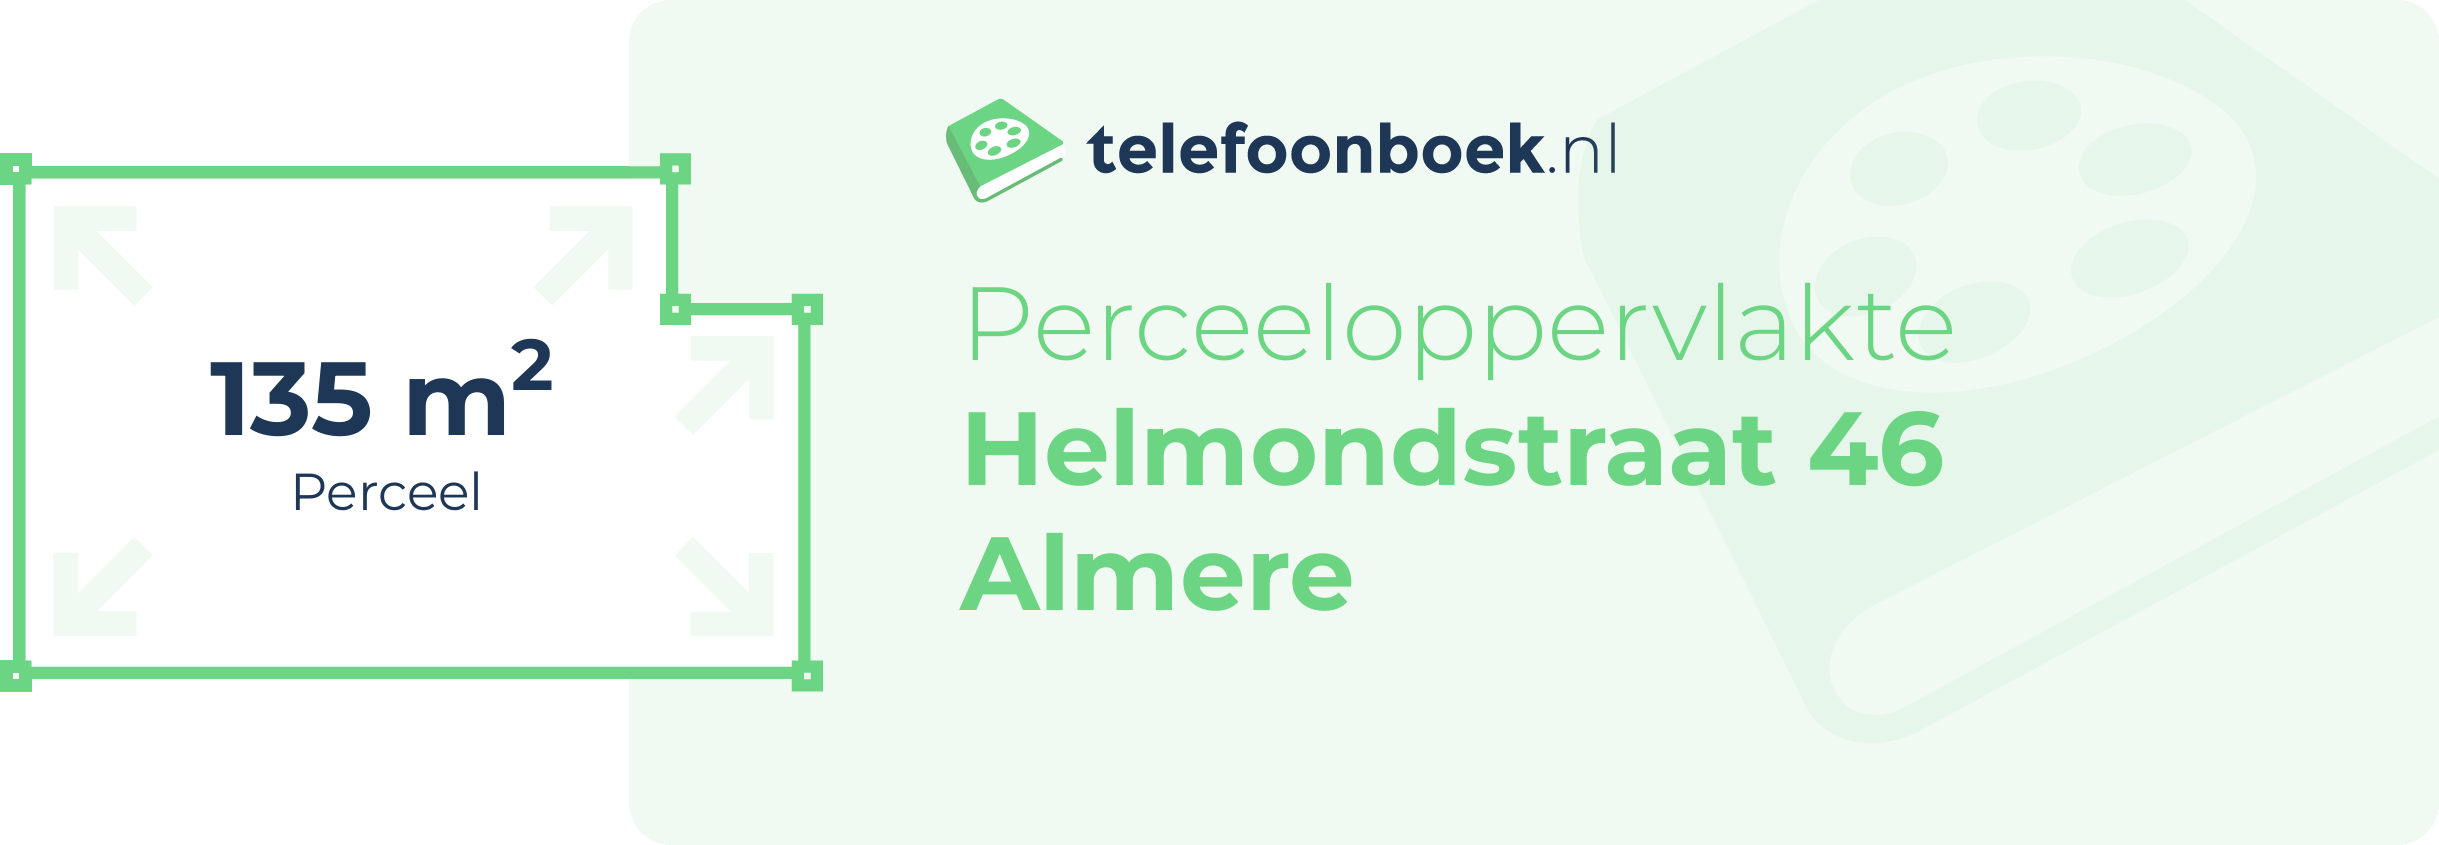 Perceeloppervlakte Helmondstraat 46 Almere